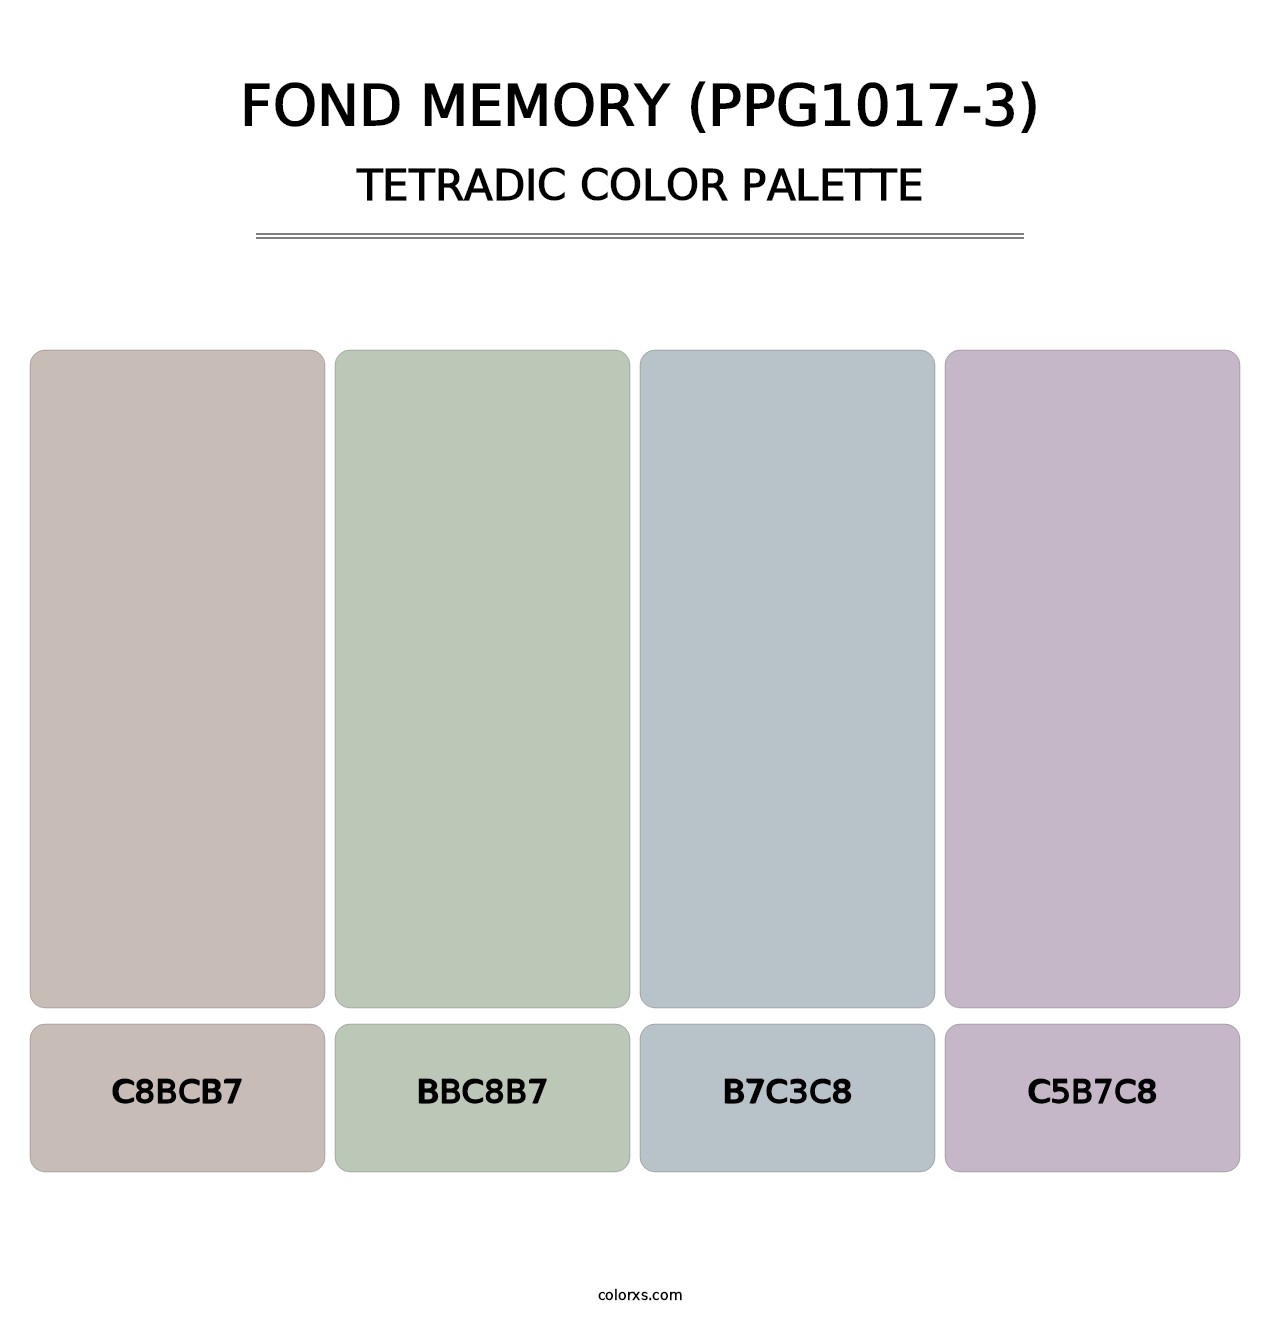 Fond Memory (PPG1017-3) - Tetradic Color Palette